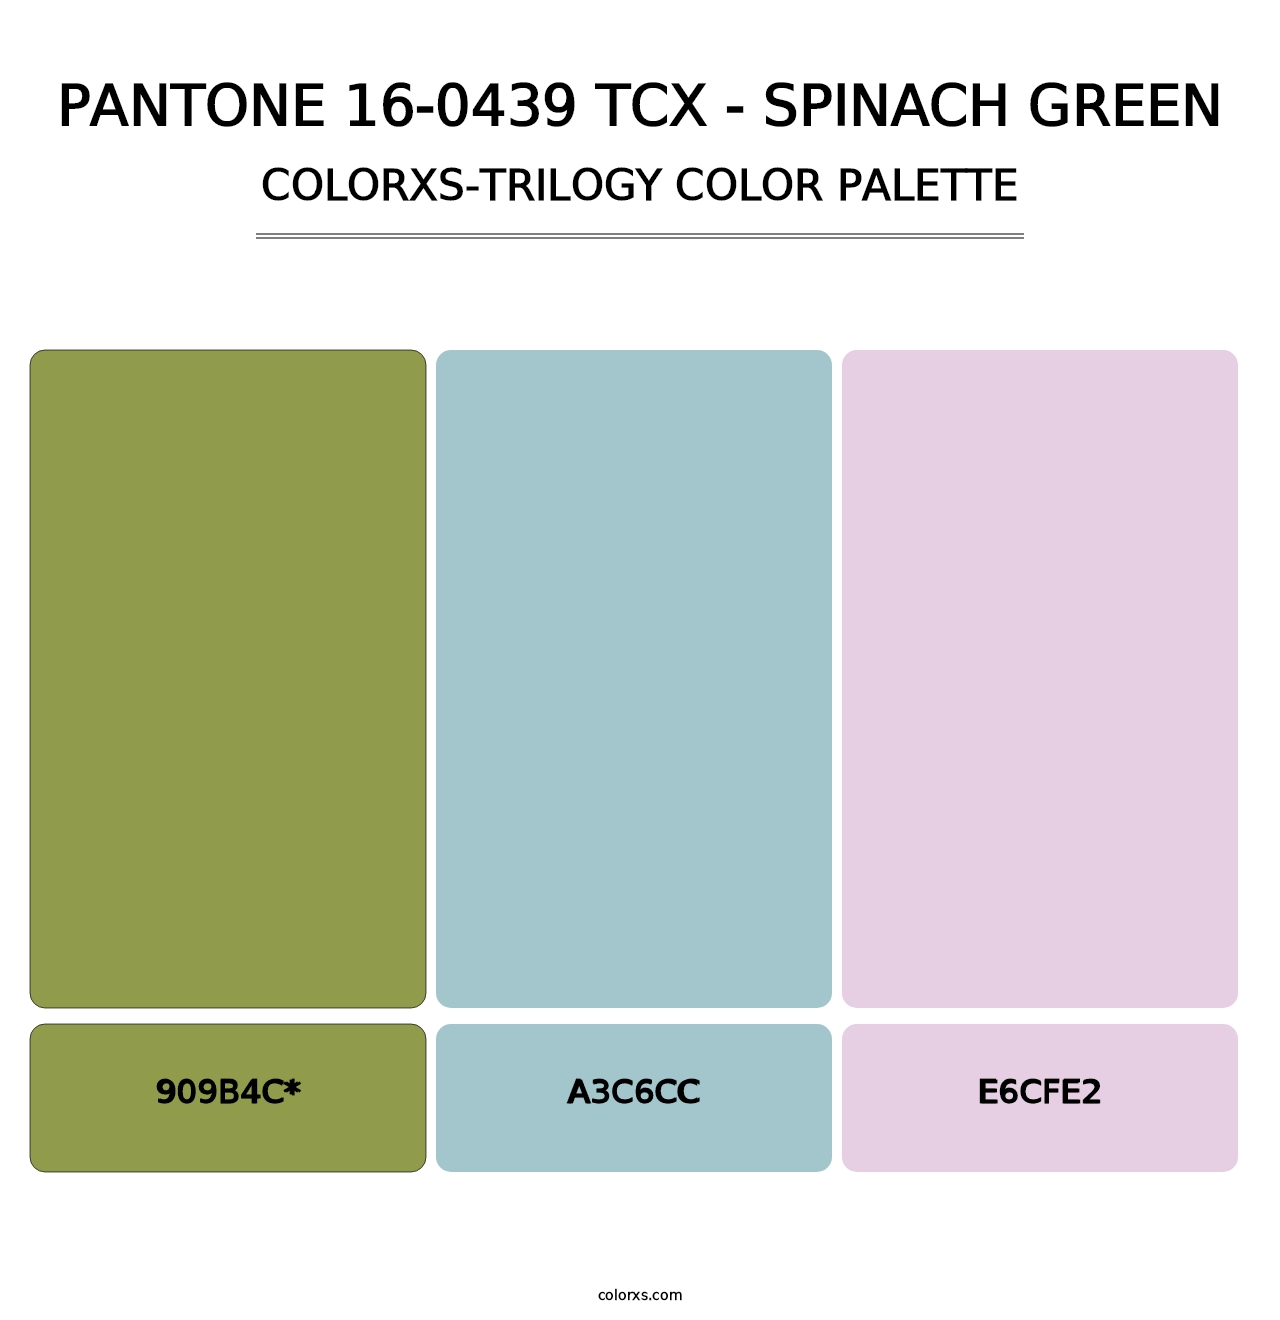 PANTONE 16-0439 TCX - Spinach Green - Colorxs Trilogy Palette